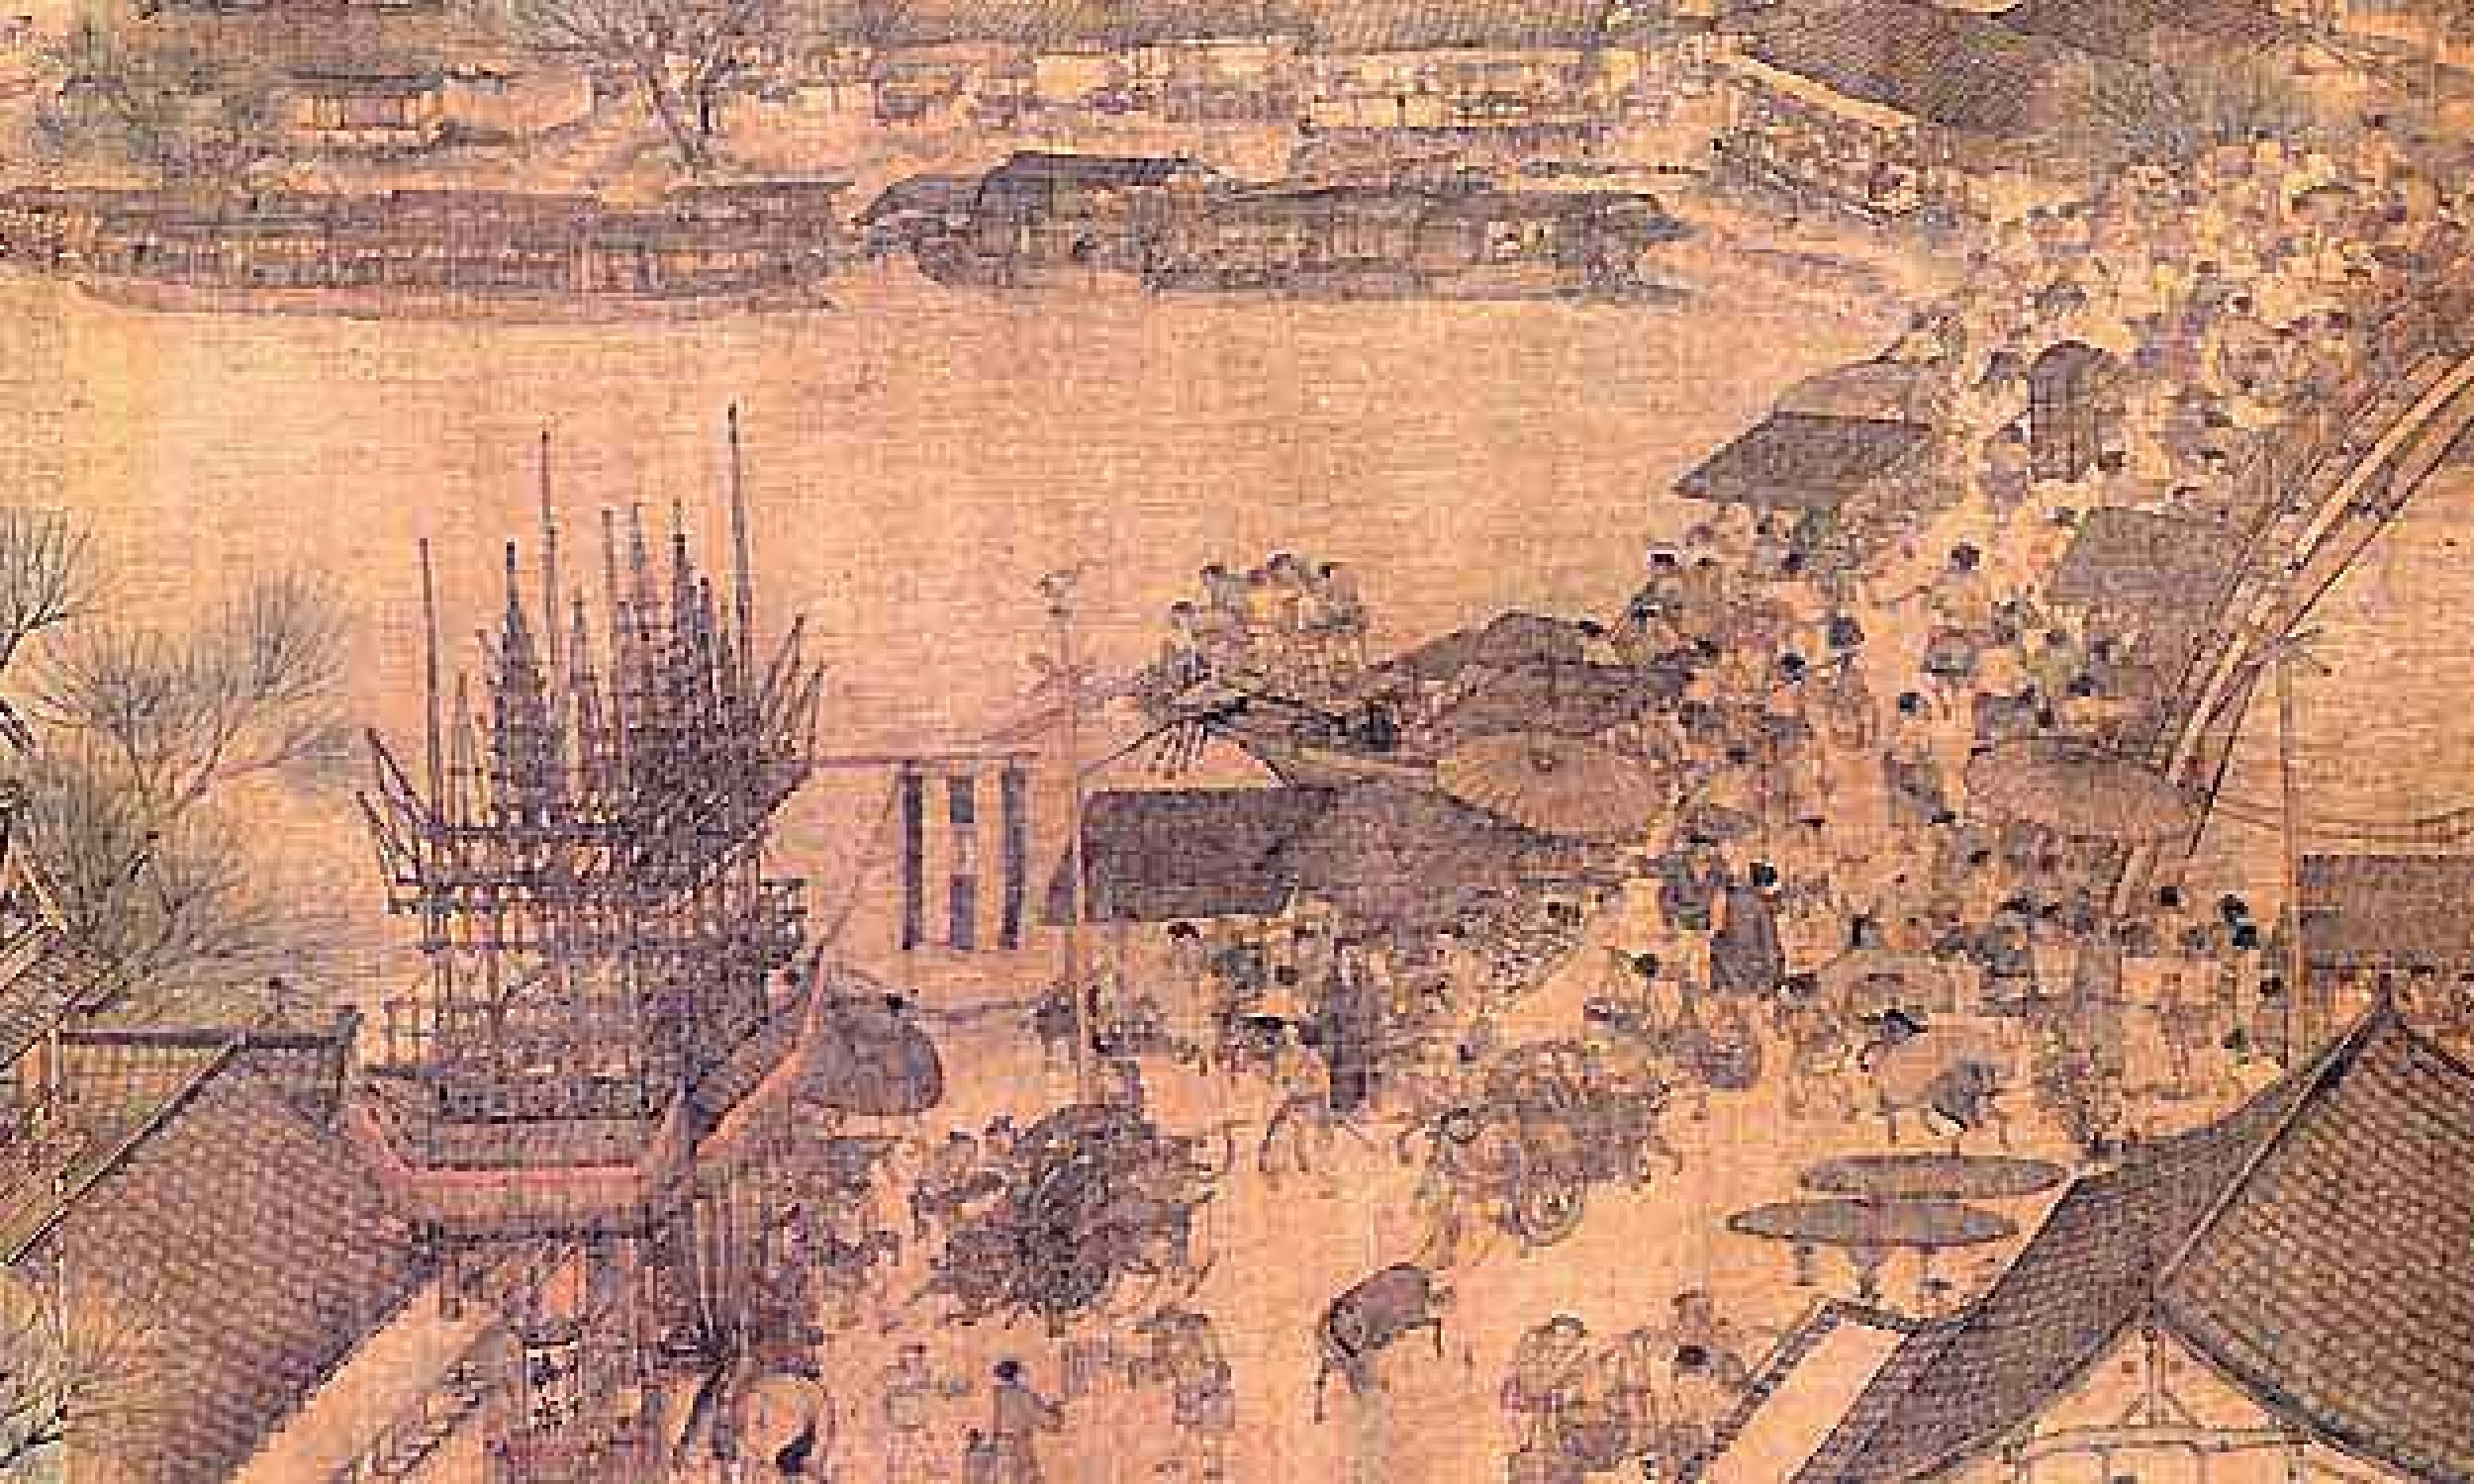 Картина Чжан Цзэдуаня «Вид на реку во время праздника Цинмин» была создана в конце правления династии Сун в Китае, в XII веке. На фото показана деталь лодки, направляющейся к мосту. Фото: http://depts.washington.edu/chinaciv/painting/4ptgqmsh.htm, Fu Xinian, ed. Zhongguo meishu quanji, Liang Song huihua, shang (Series Vol. 3), pl. 51, pp. 128-137. Zbiory Muzeum Pałacowego w Pekinie, Domena publiczna, https://commons.wikimedia.org/w/index.php?curid=3507810